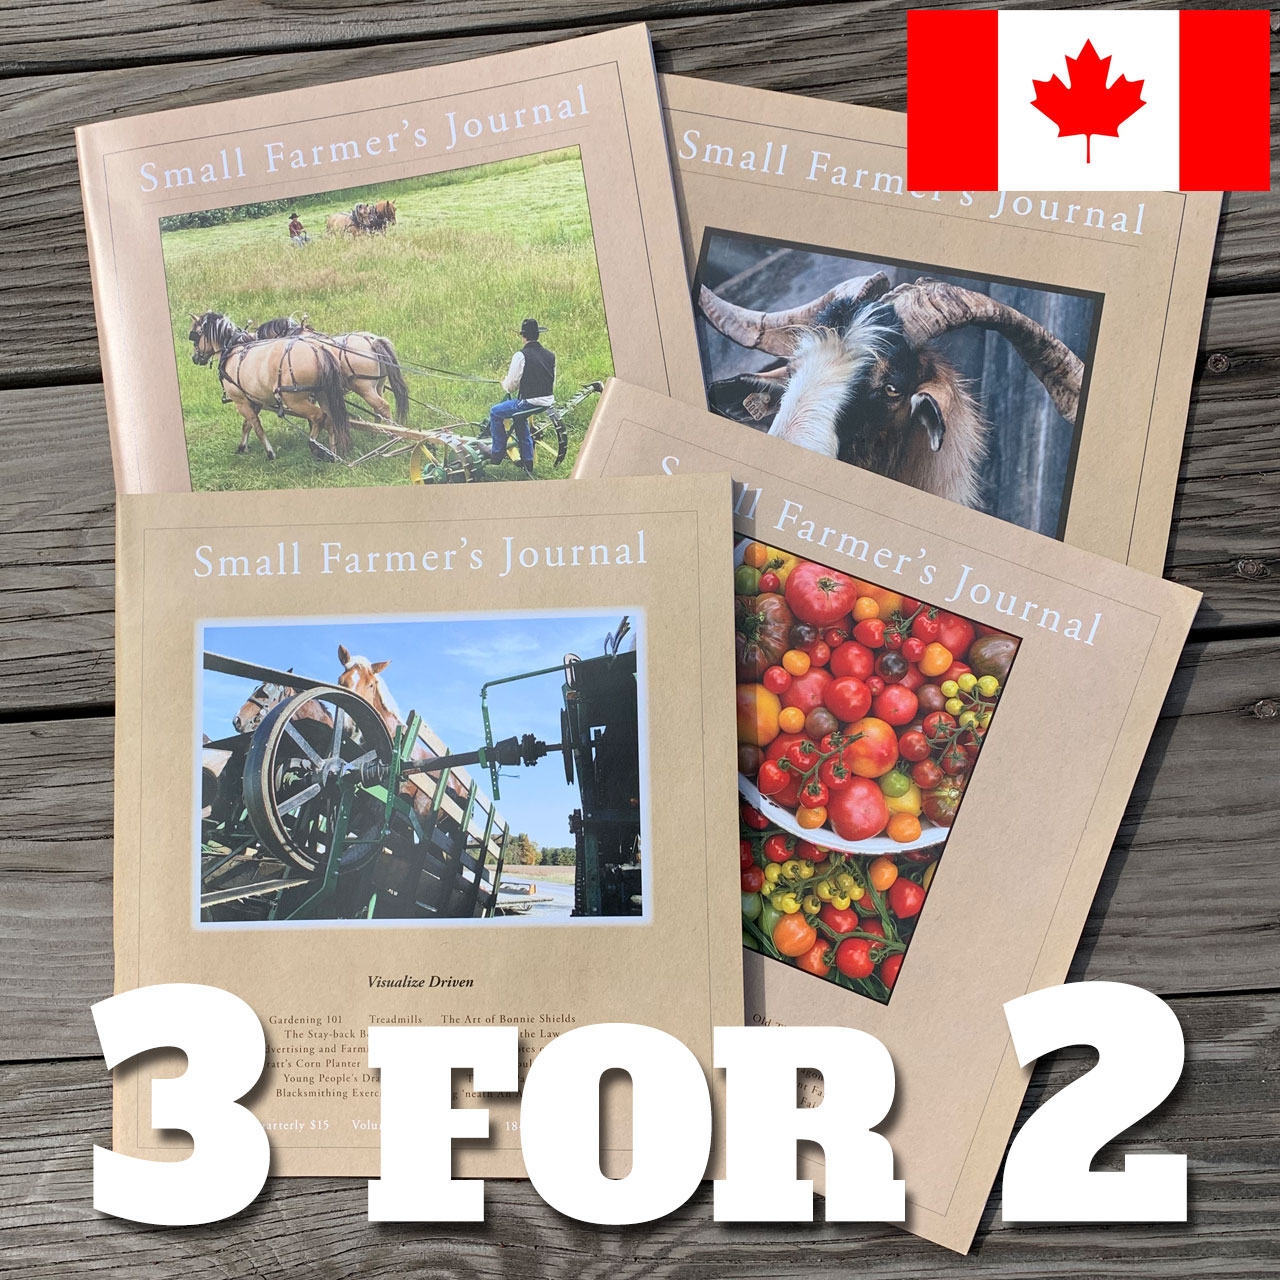 SFJ Subscription 3 for 2 Canada